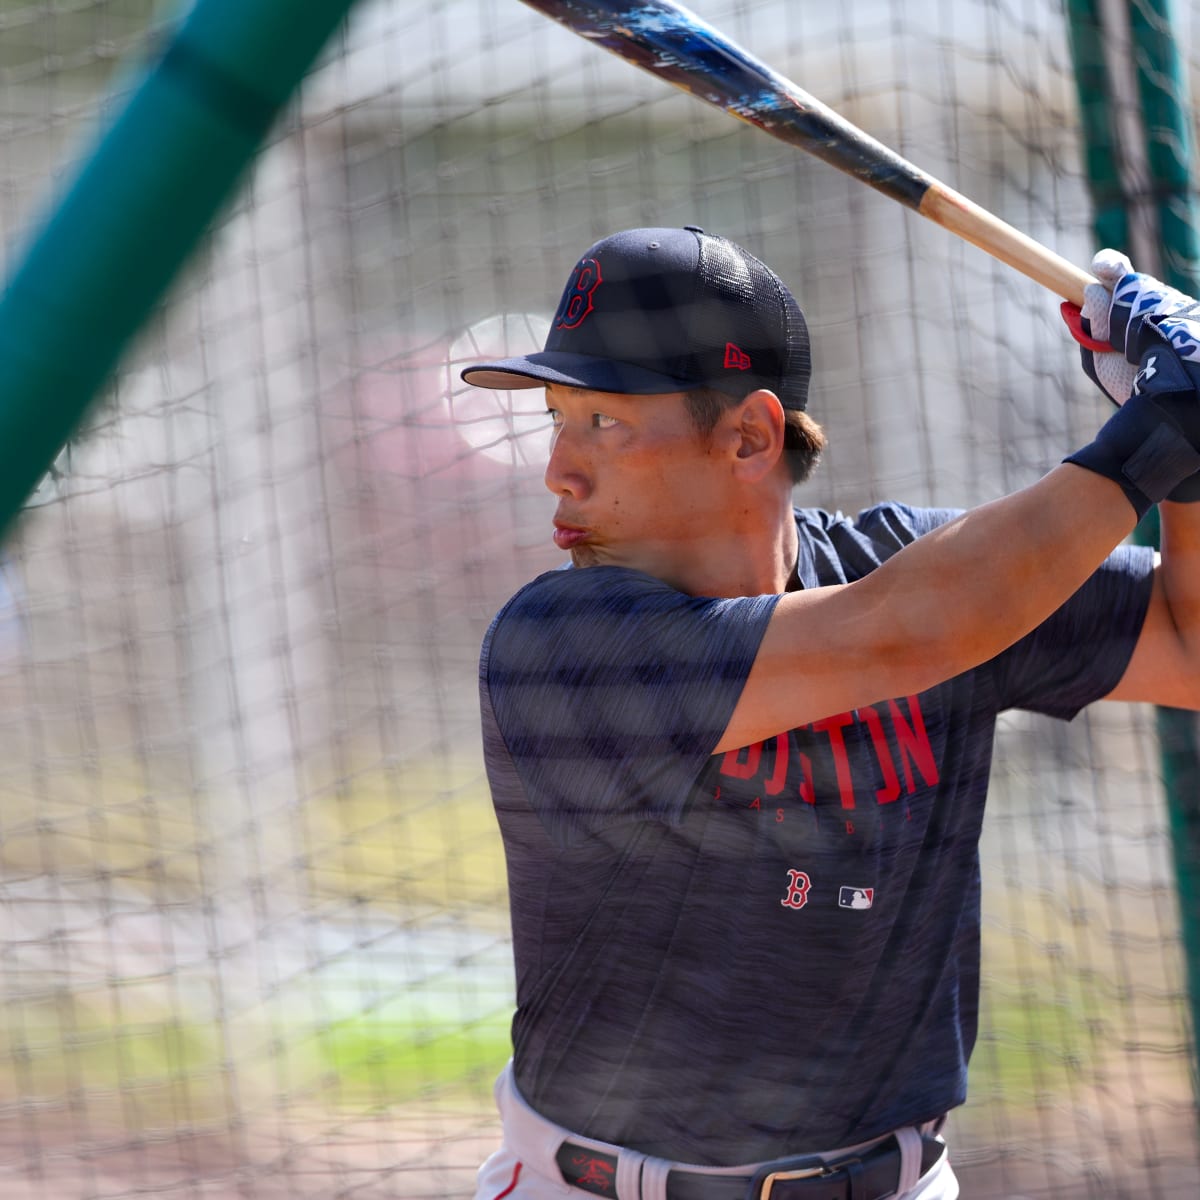 Masataka Yoshida will wear unique patch on Red Sox Opening Day uniform